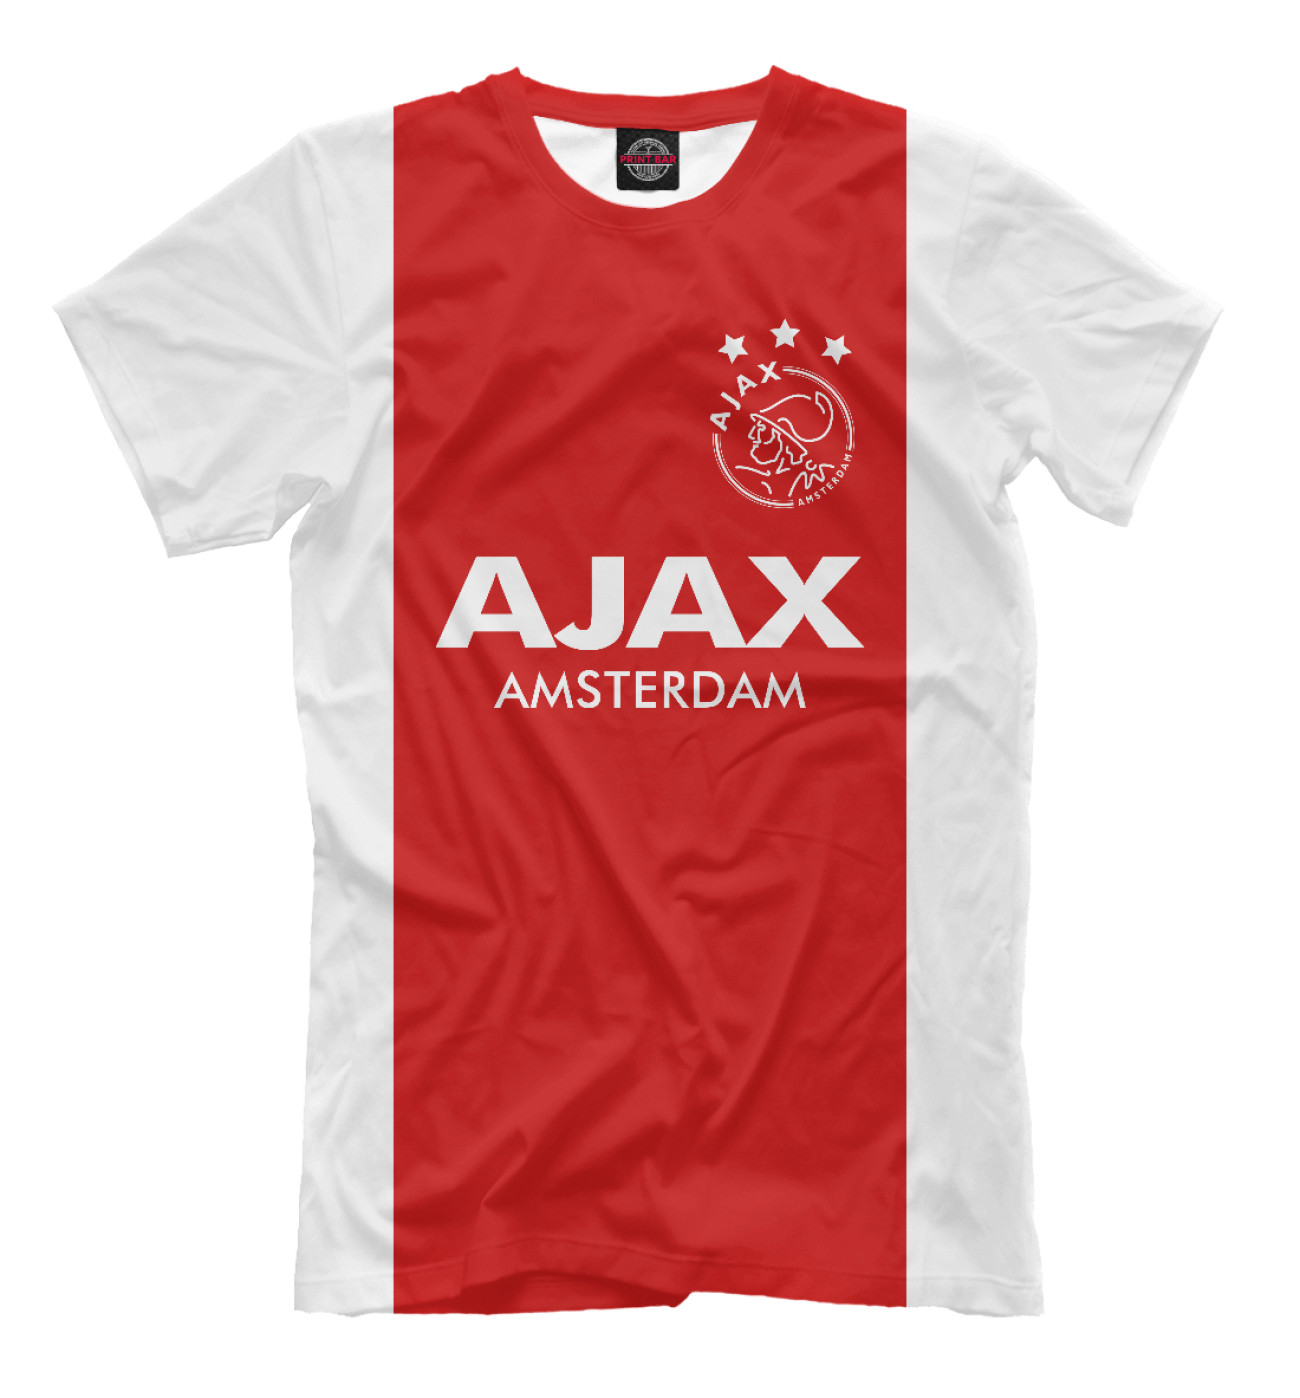 Мужская Футболка Аякс Амстердам, артикул: AJX-369901-fut-2